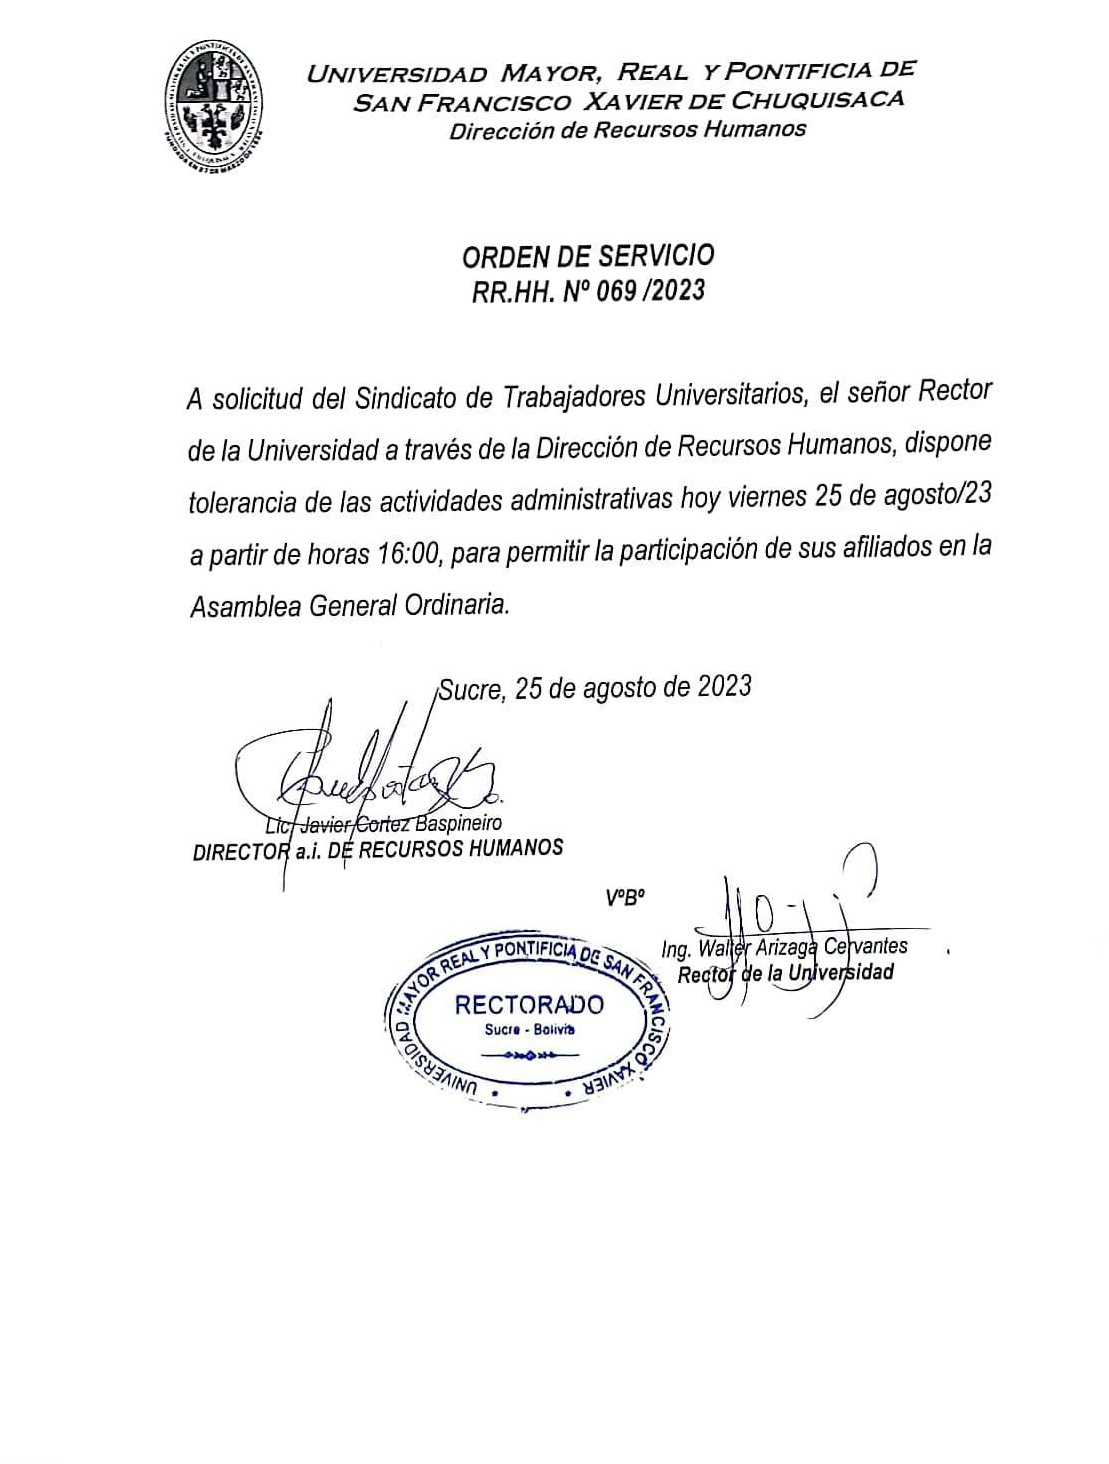 ORDEN DE SERVICIO RR.HH. Nº 069/2023, TOLERANCIA ADMINISTRATIVA POR ASAMBLEA.